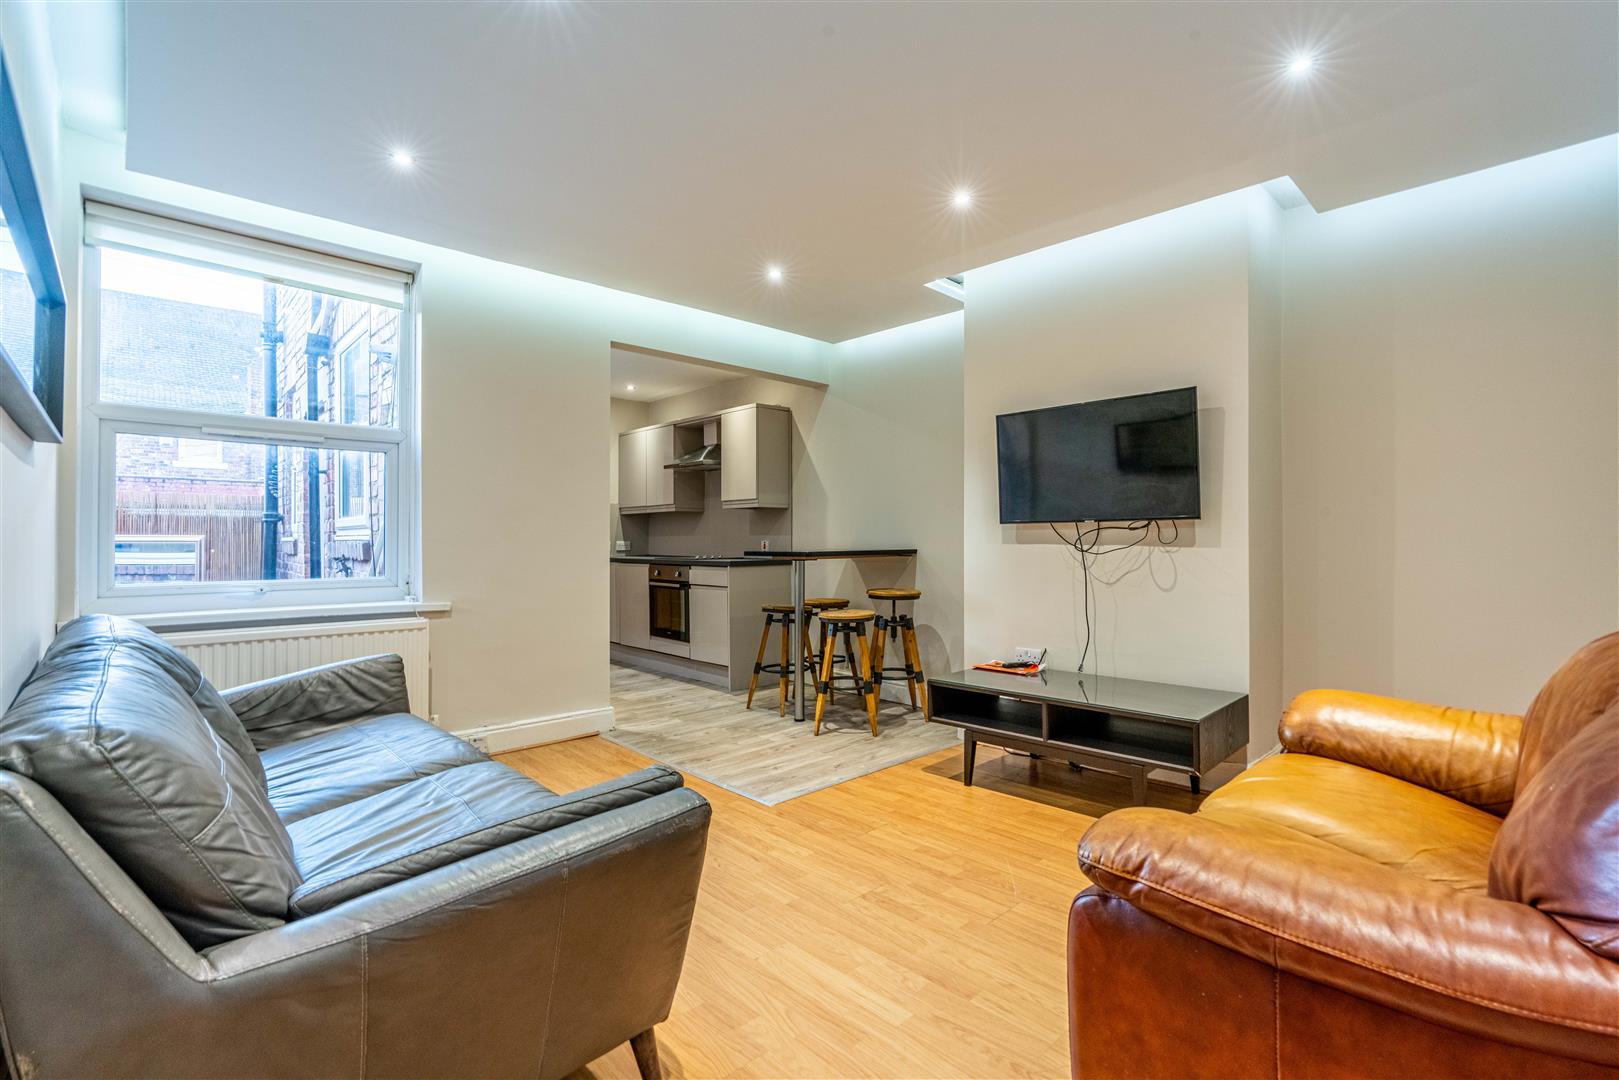 2 bed apartment to rent in Chillingham Road, Heaton, NE6 